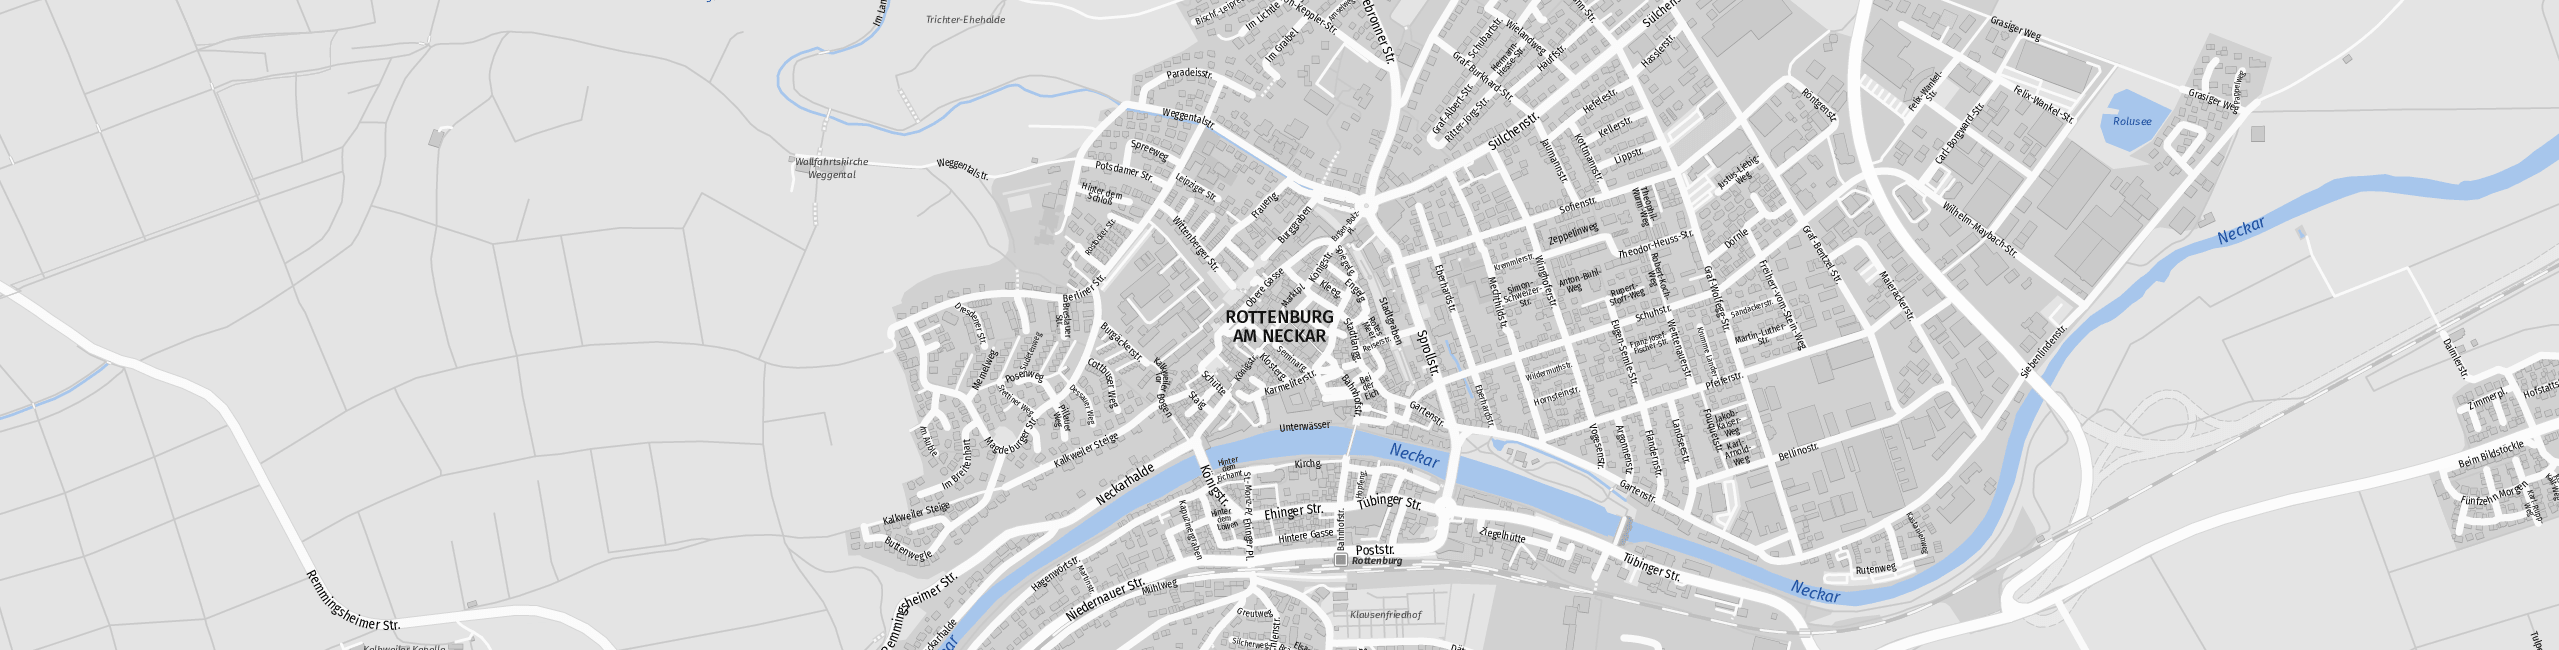 Stadtplan Rottenburg am Neckar zum Downloaden.